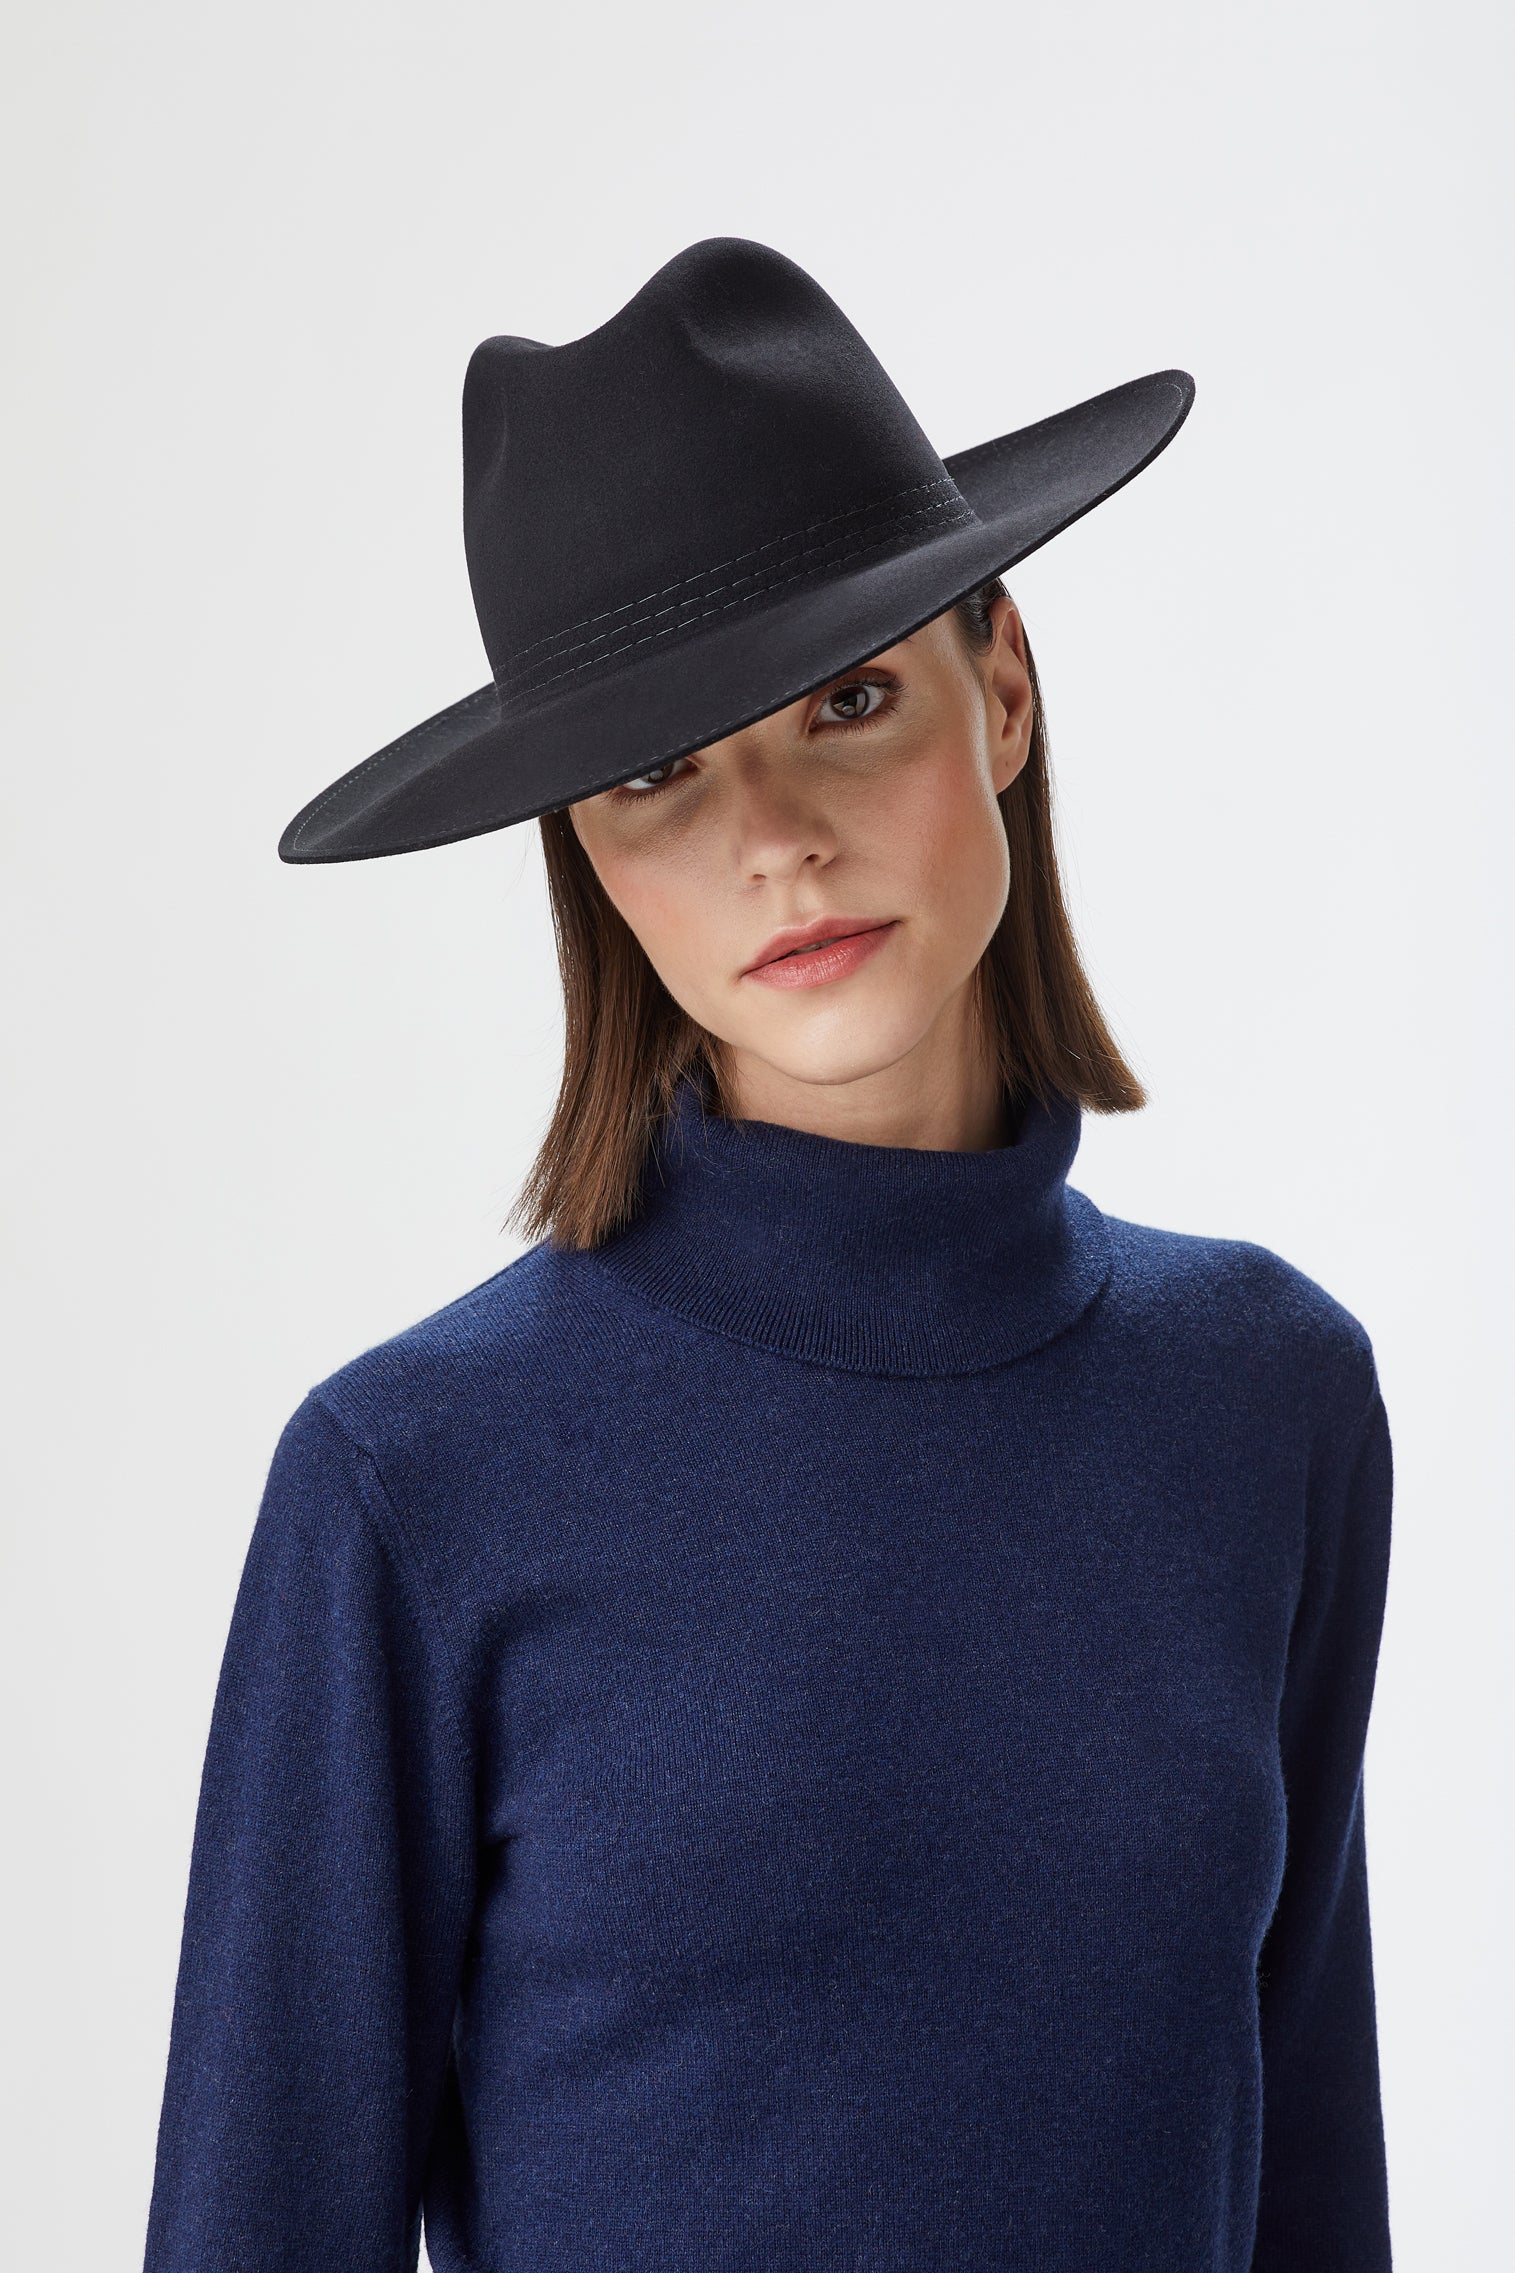 Hepworth Black Fedora - Women’s Hats - Lock & Co. Hatters London UK